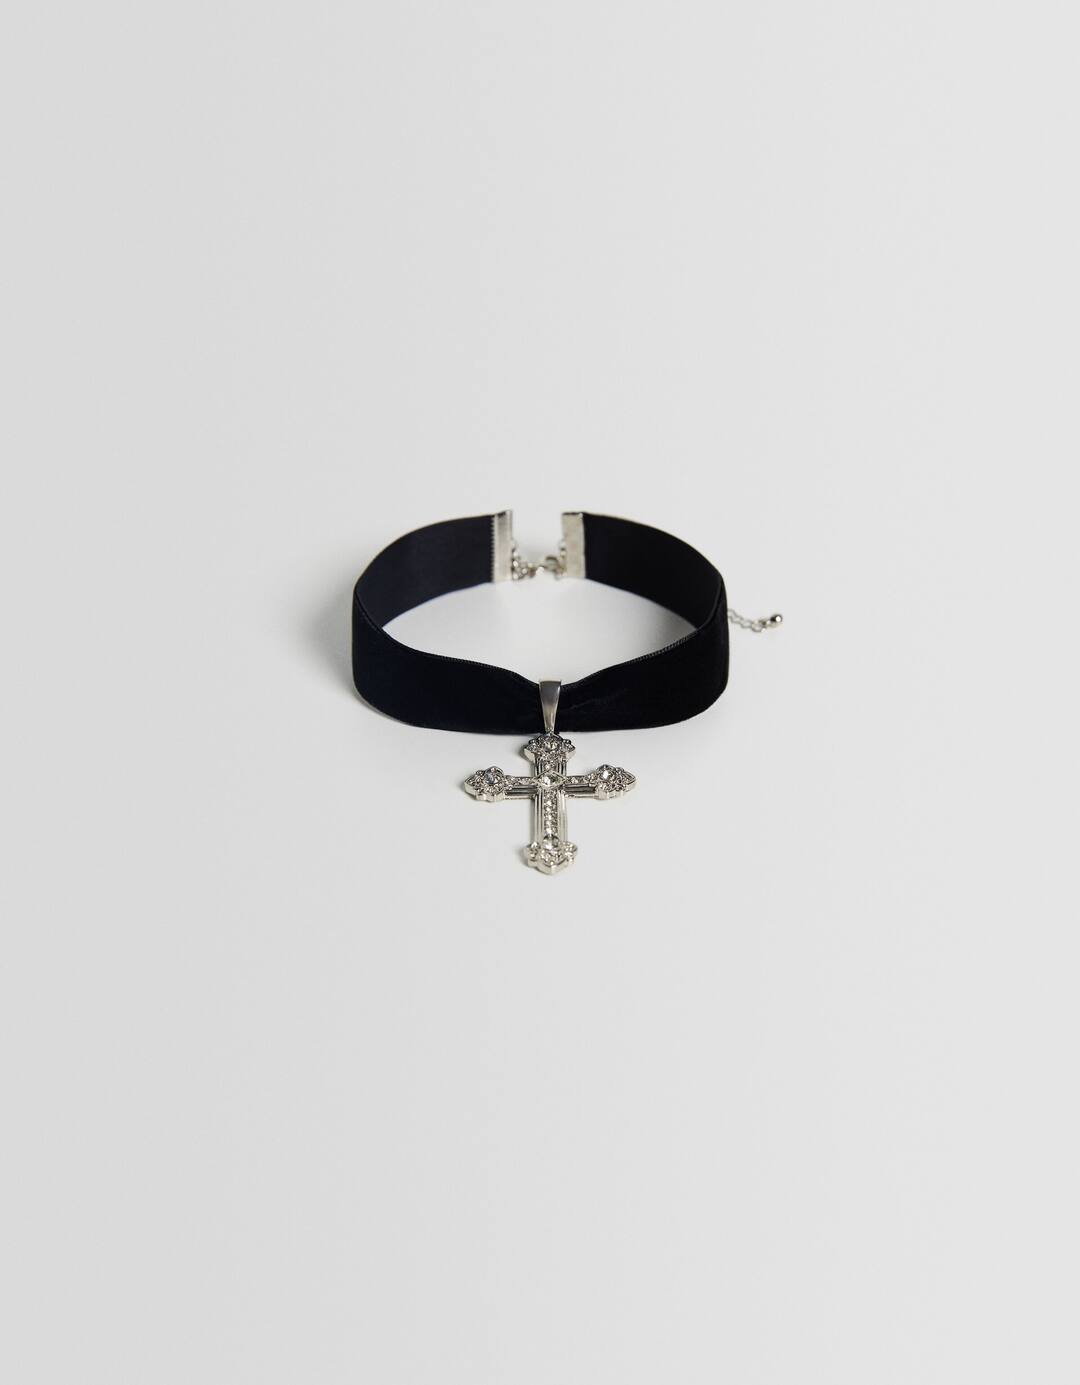 Choker necklace with a rhinestone cross